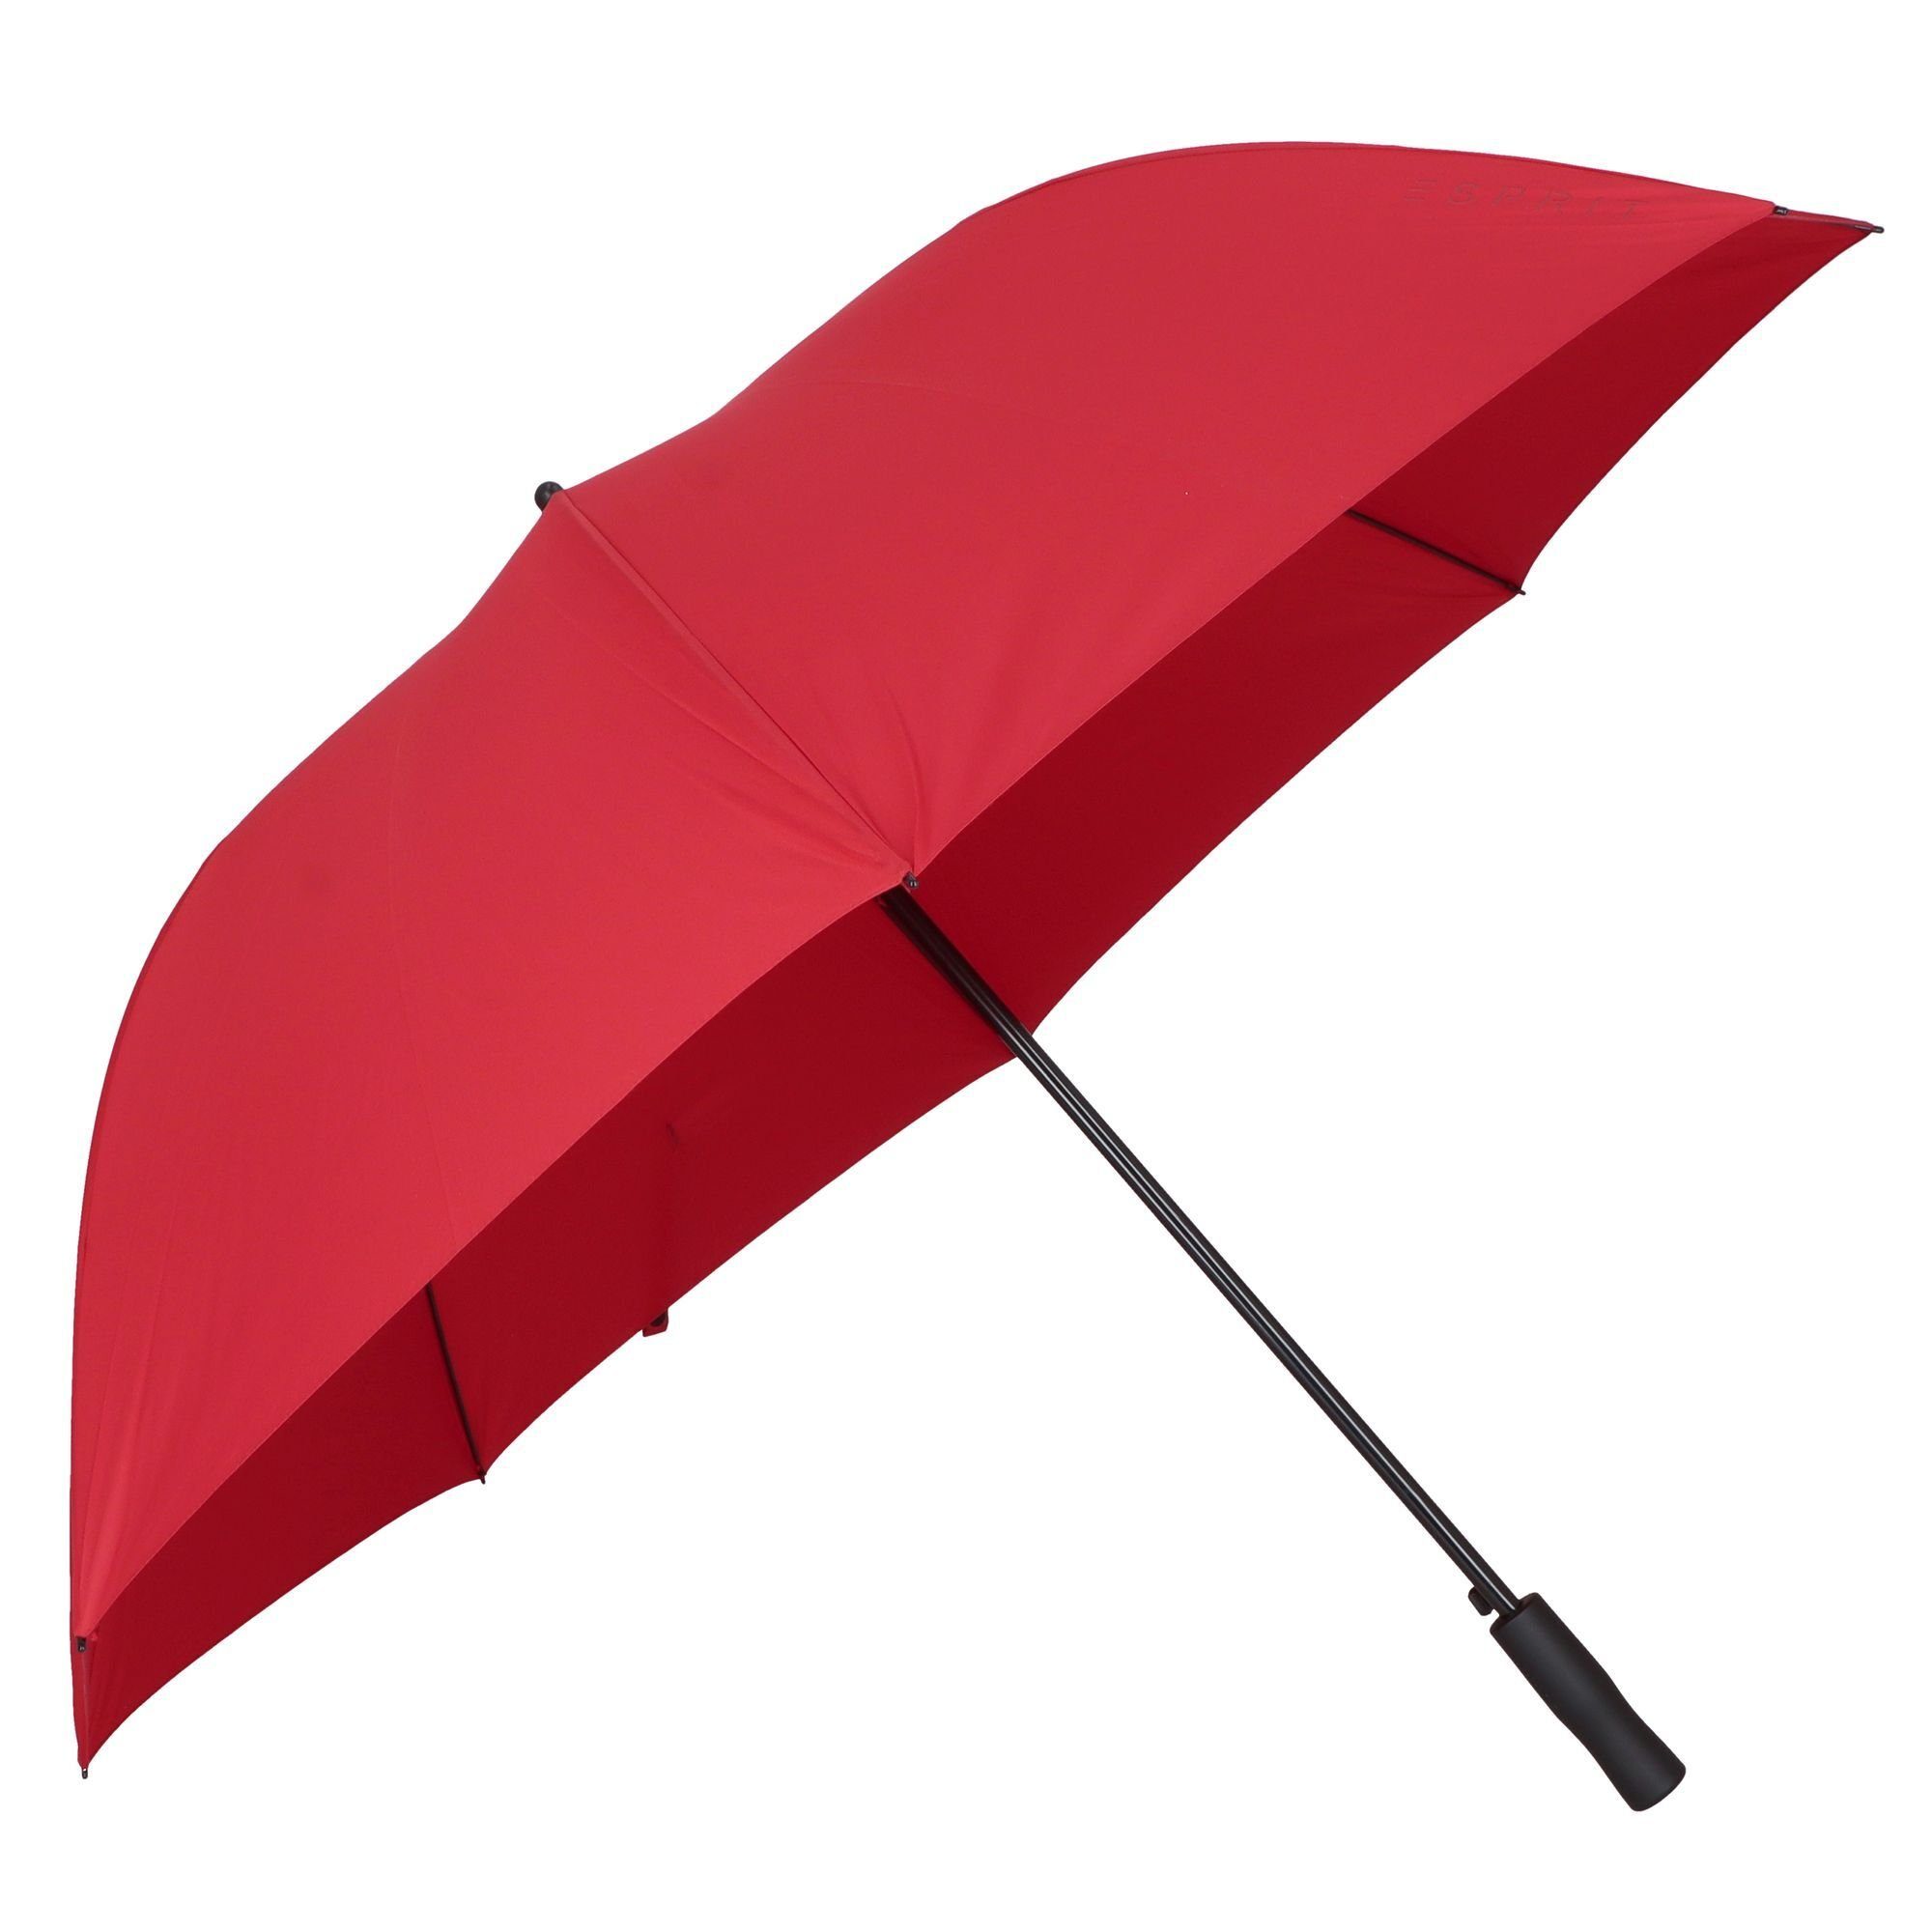 Stockregenschirm, flag Esprit 117cm red